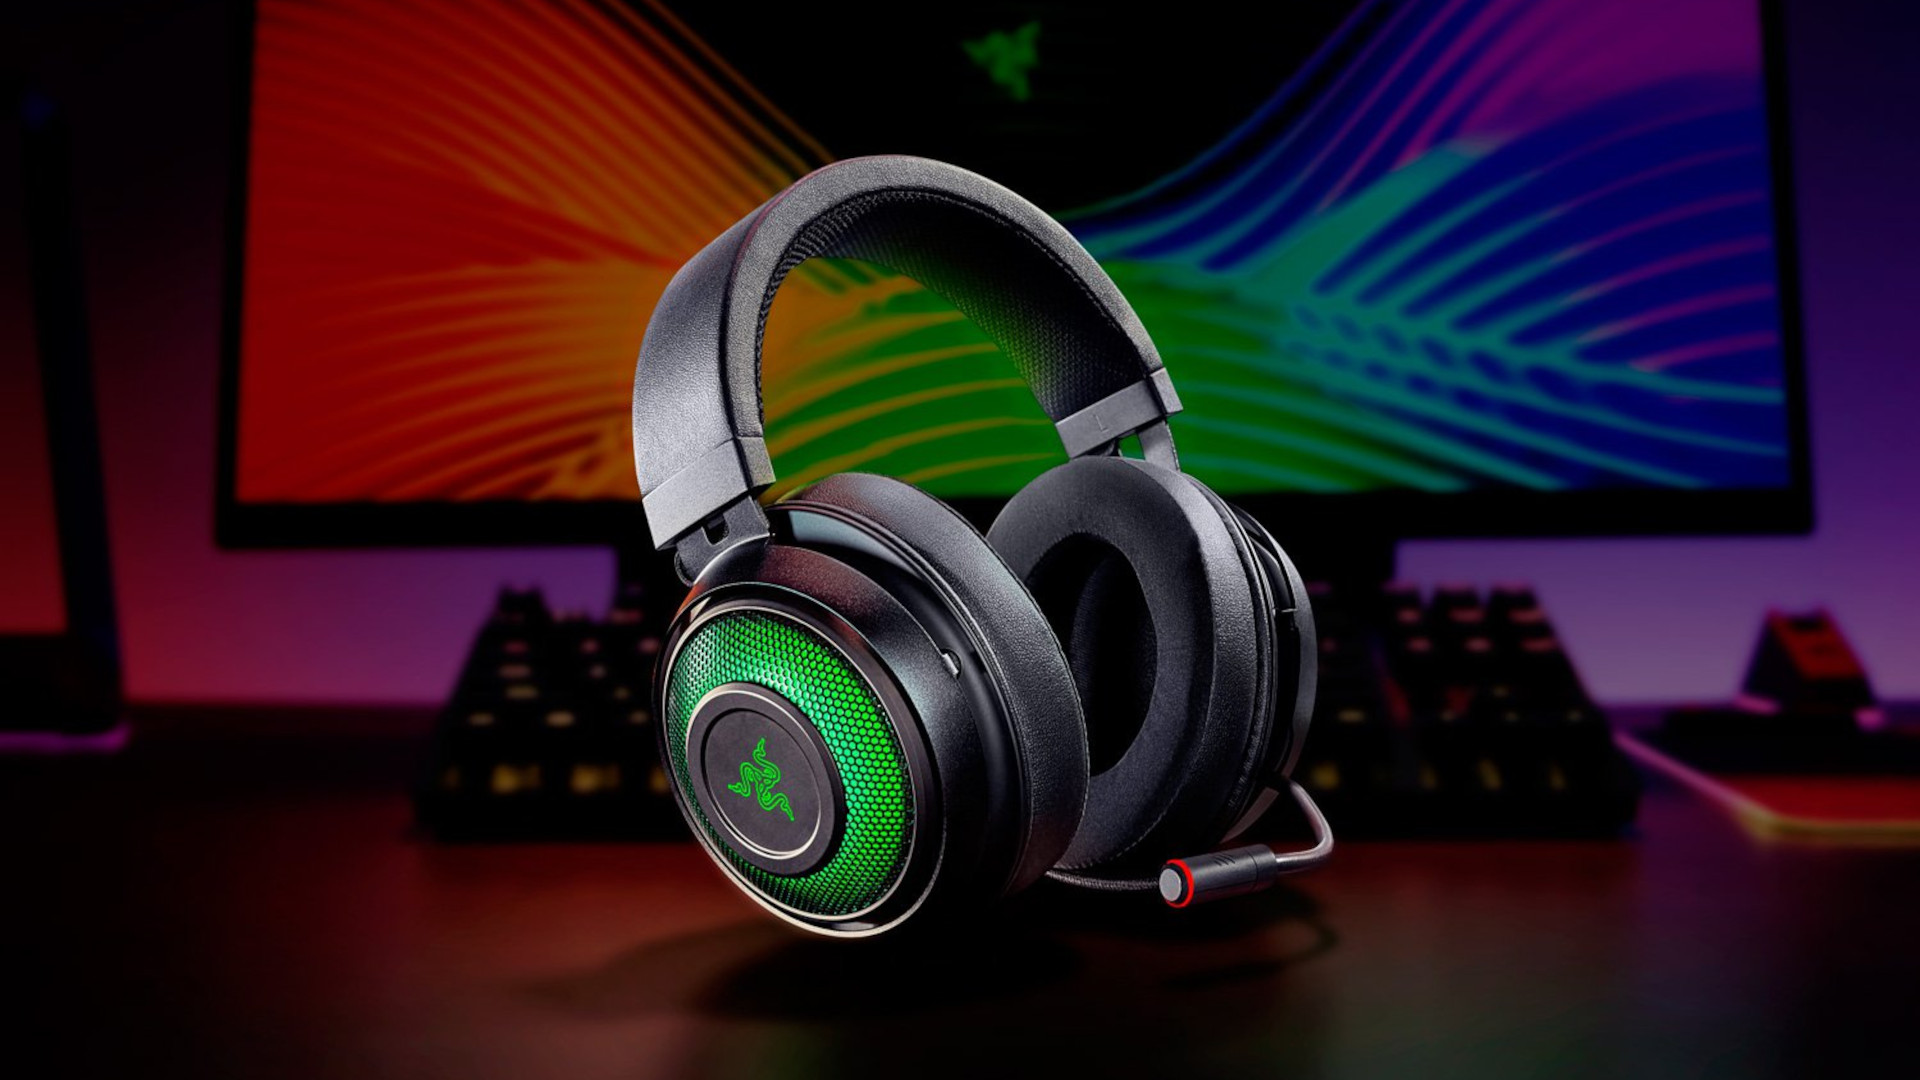 Get the Razer Kraken Ultimate gaming headset for half price